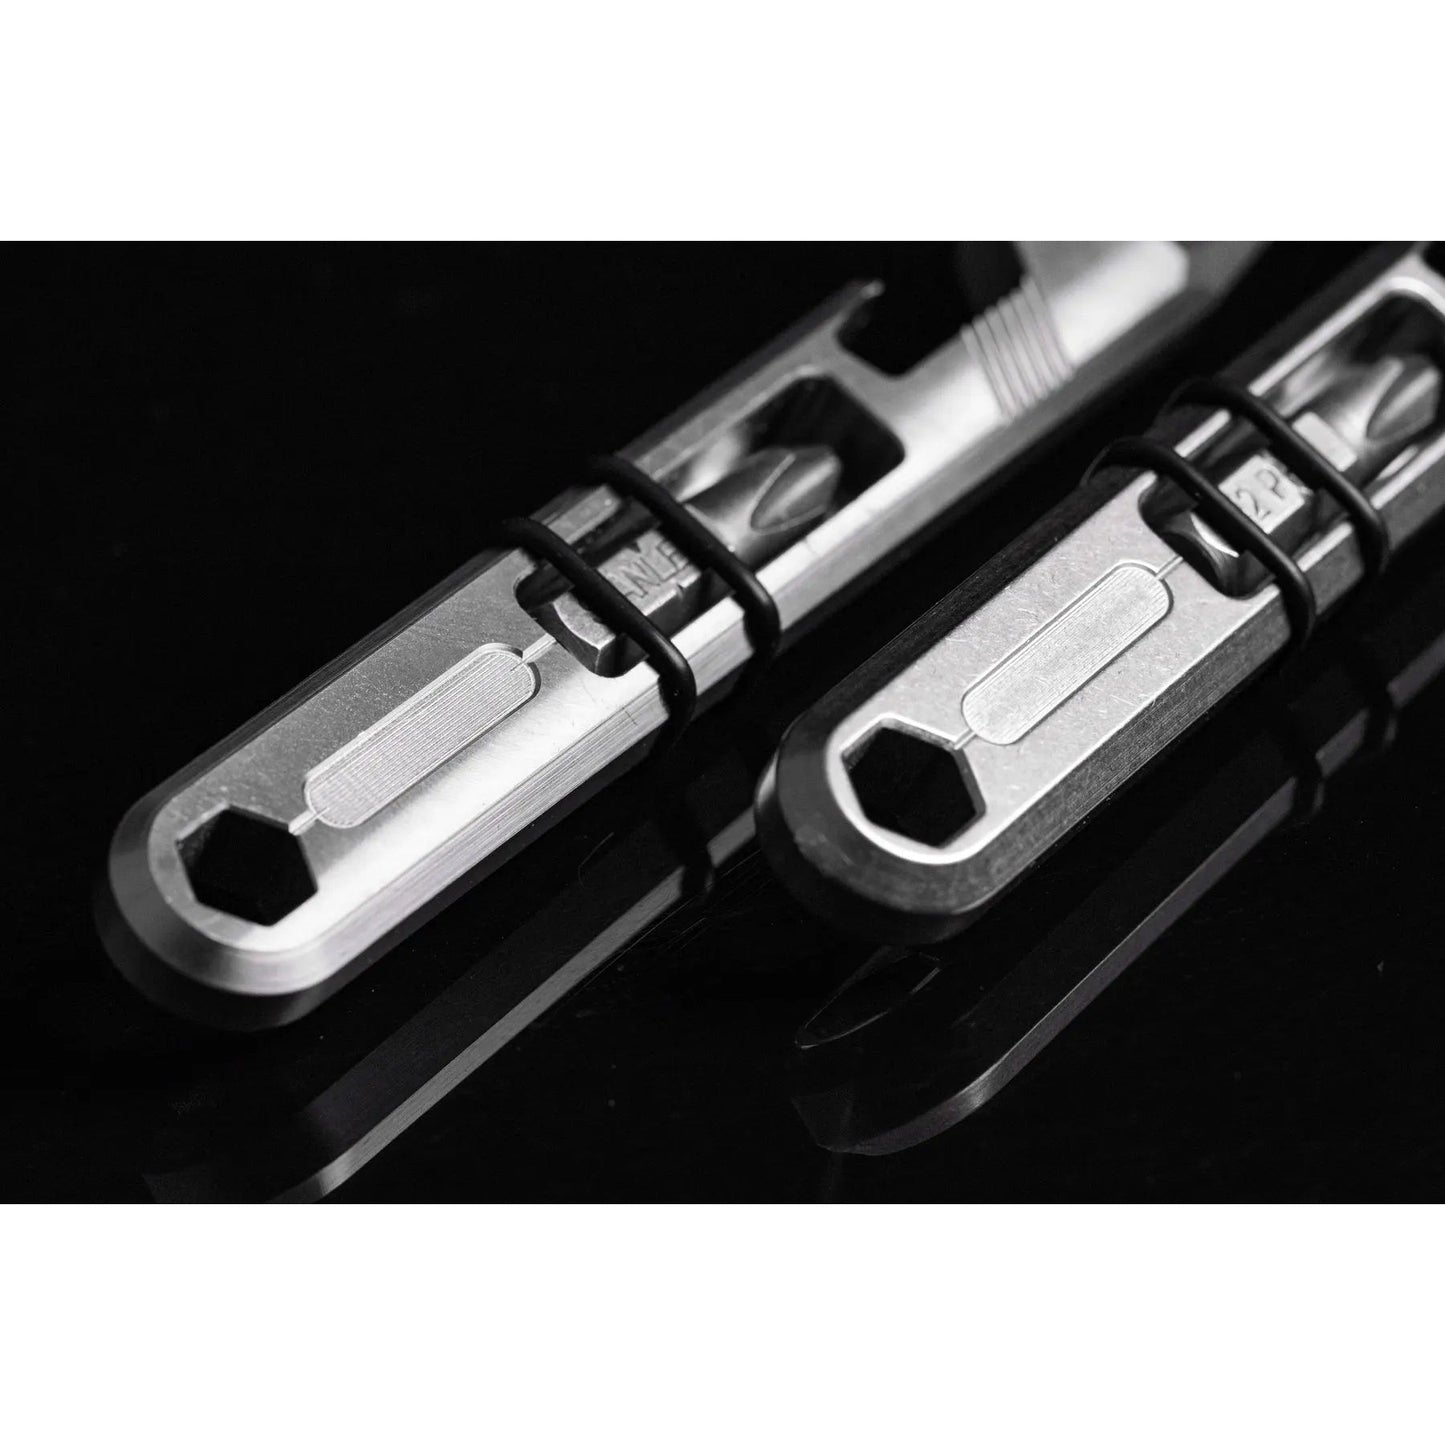 Titanium Multi-fuction Pry Bar Tool Zyac knives